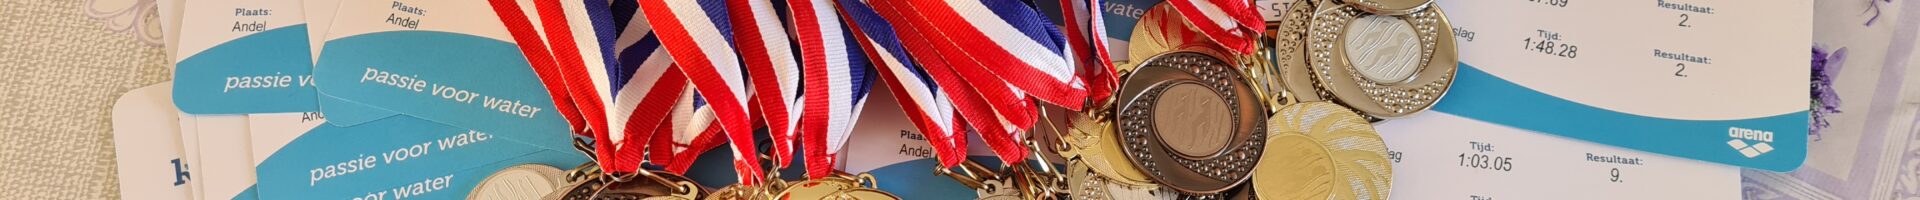 Minioren Biesboschzwemmers behalen ruime medailleoogst